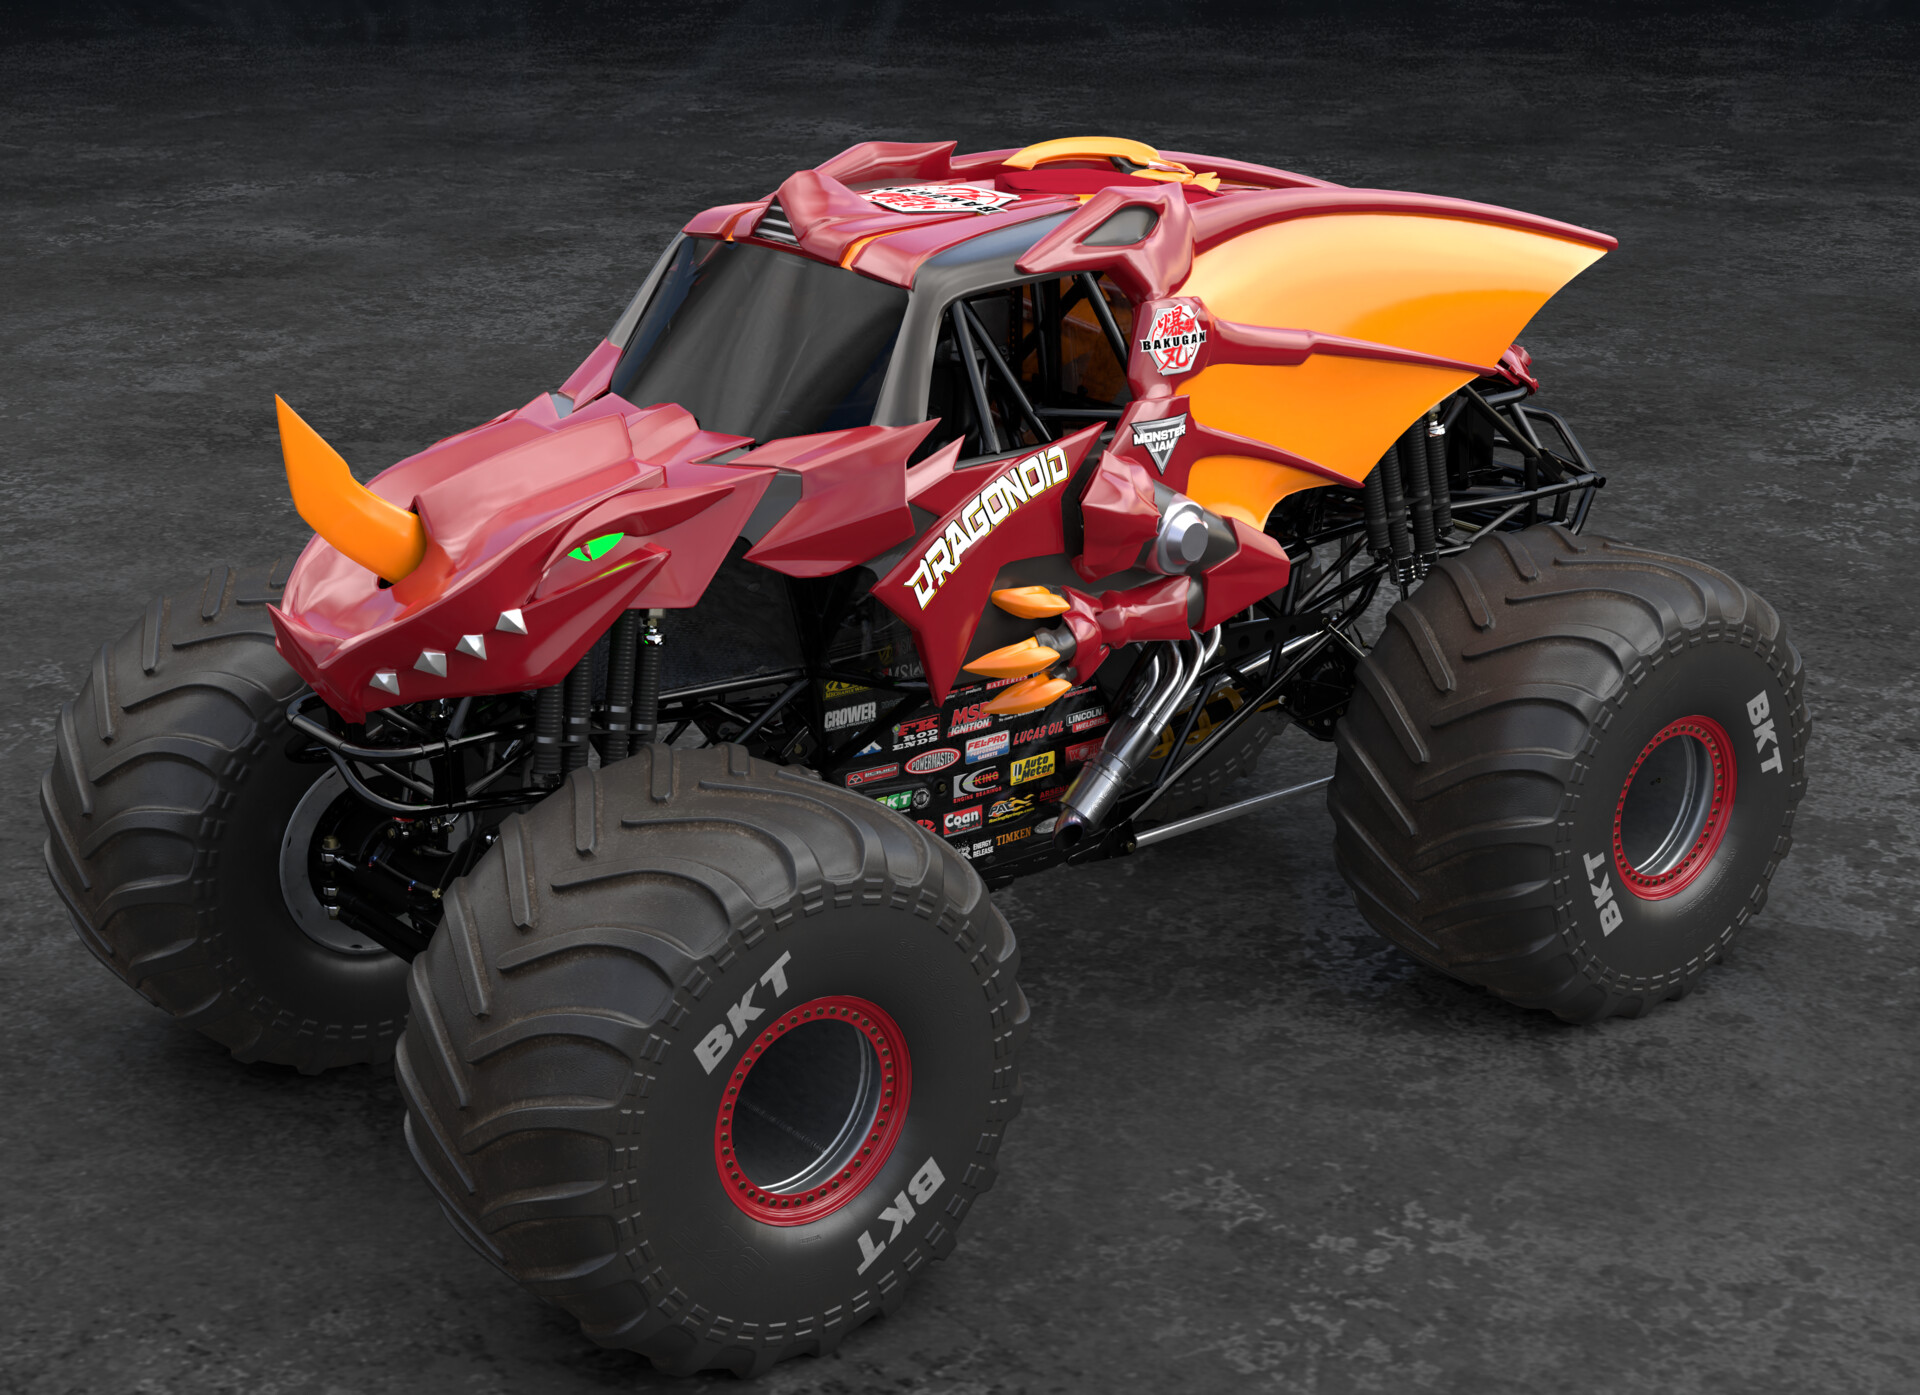 bakugan dragonoid monster truck toy